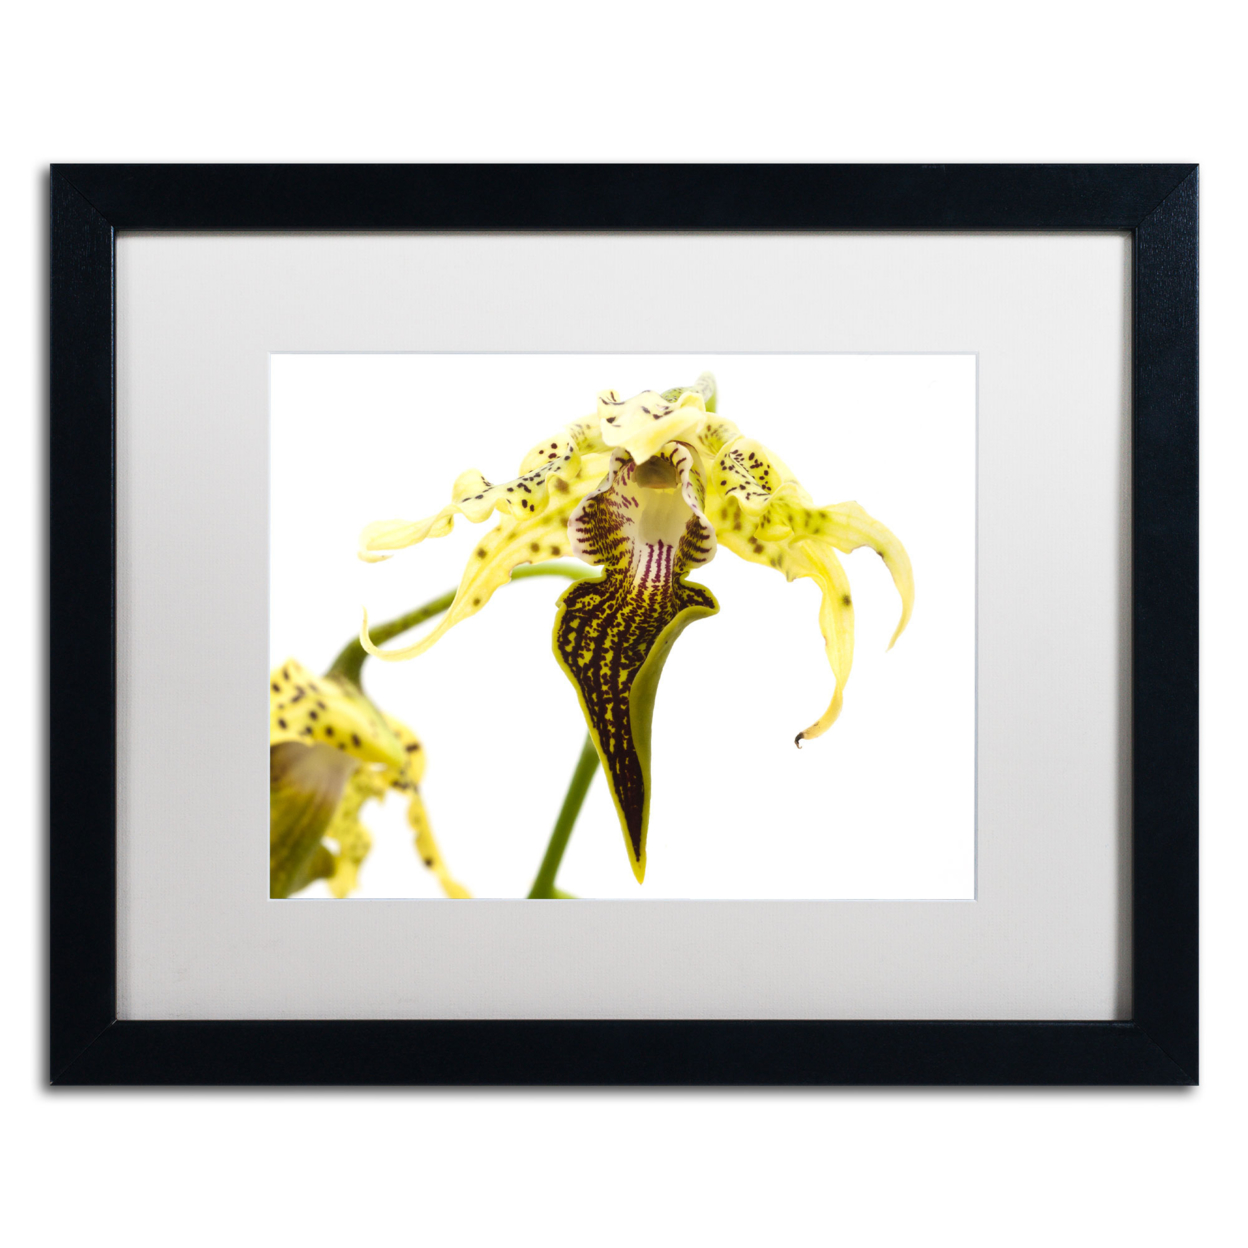 Kurt Shaffer 'Wild Looking Orchid' Black Wooden Framed Art 18 X 22 Inches